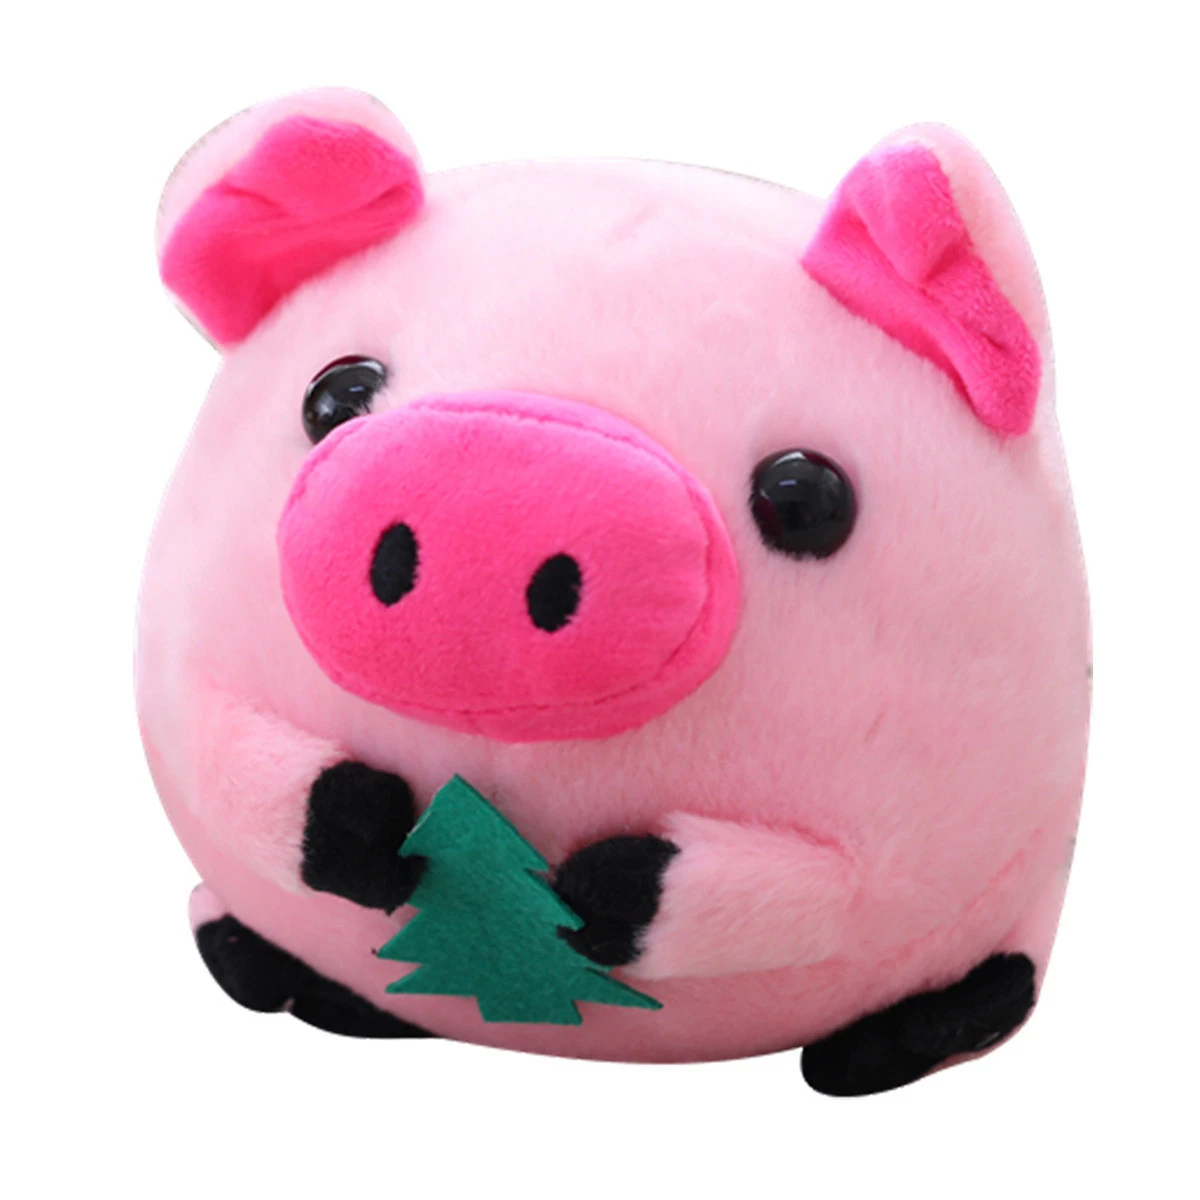 Plush Pig Singing Ball Soft Kids Toy Anpanman Toy w/ 70 Songs Recordable 